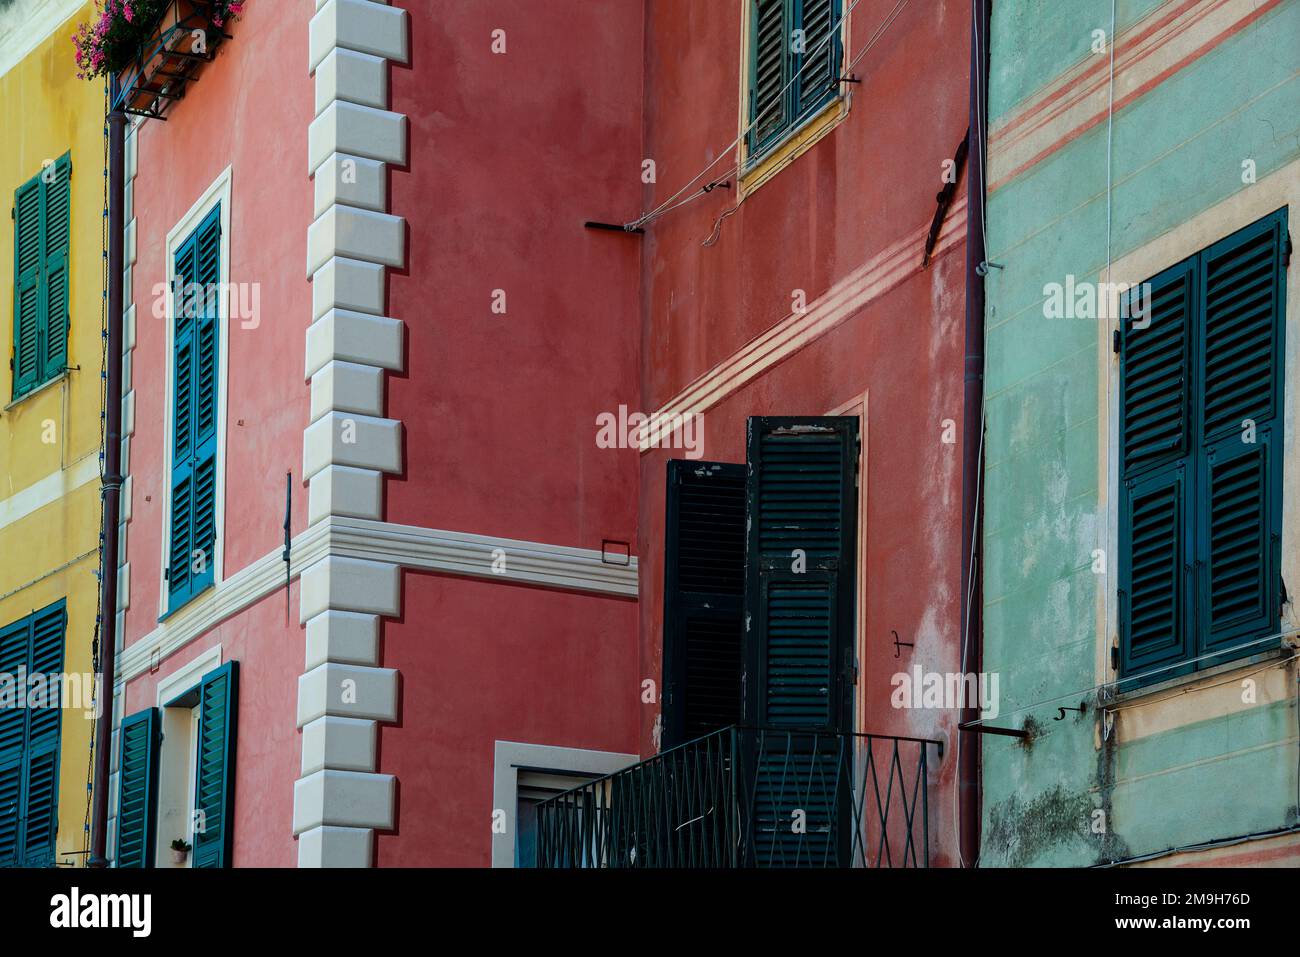 View of colorful buildings, Portofino, Italy Stock Photo